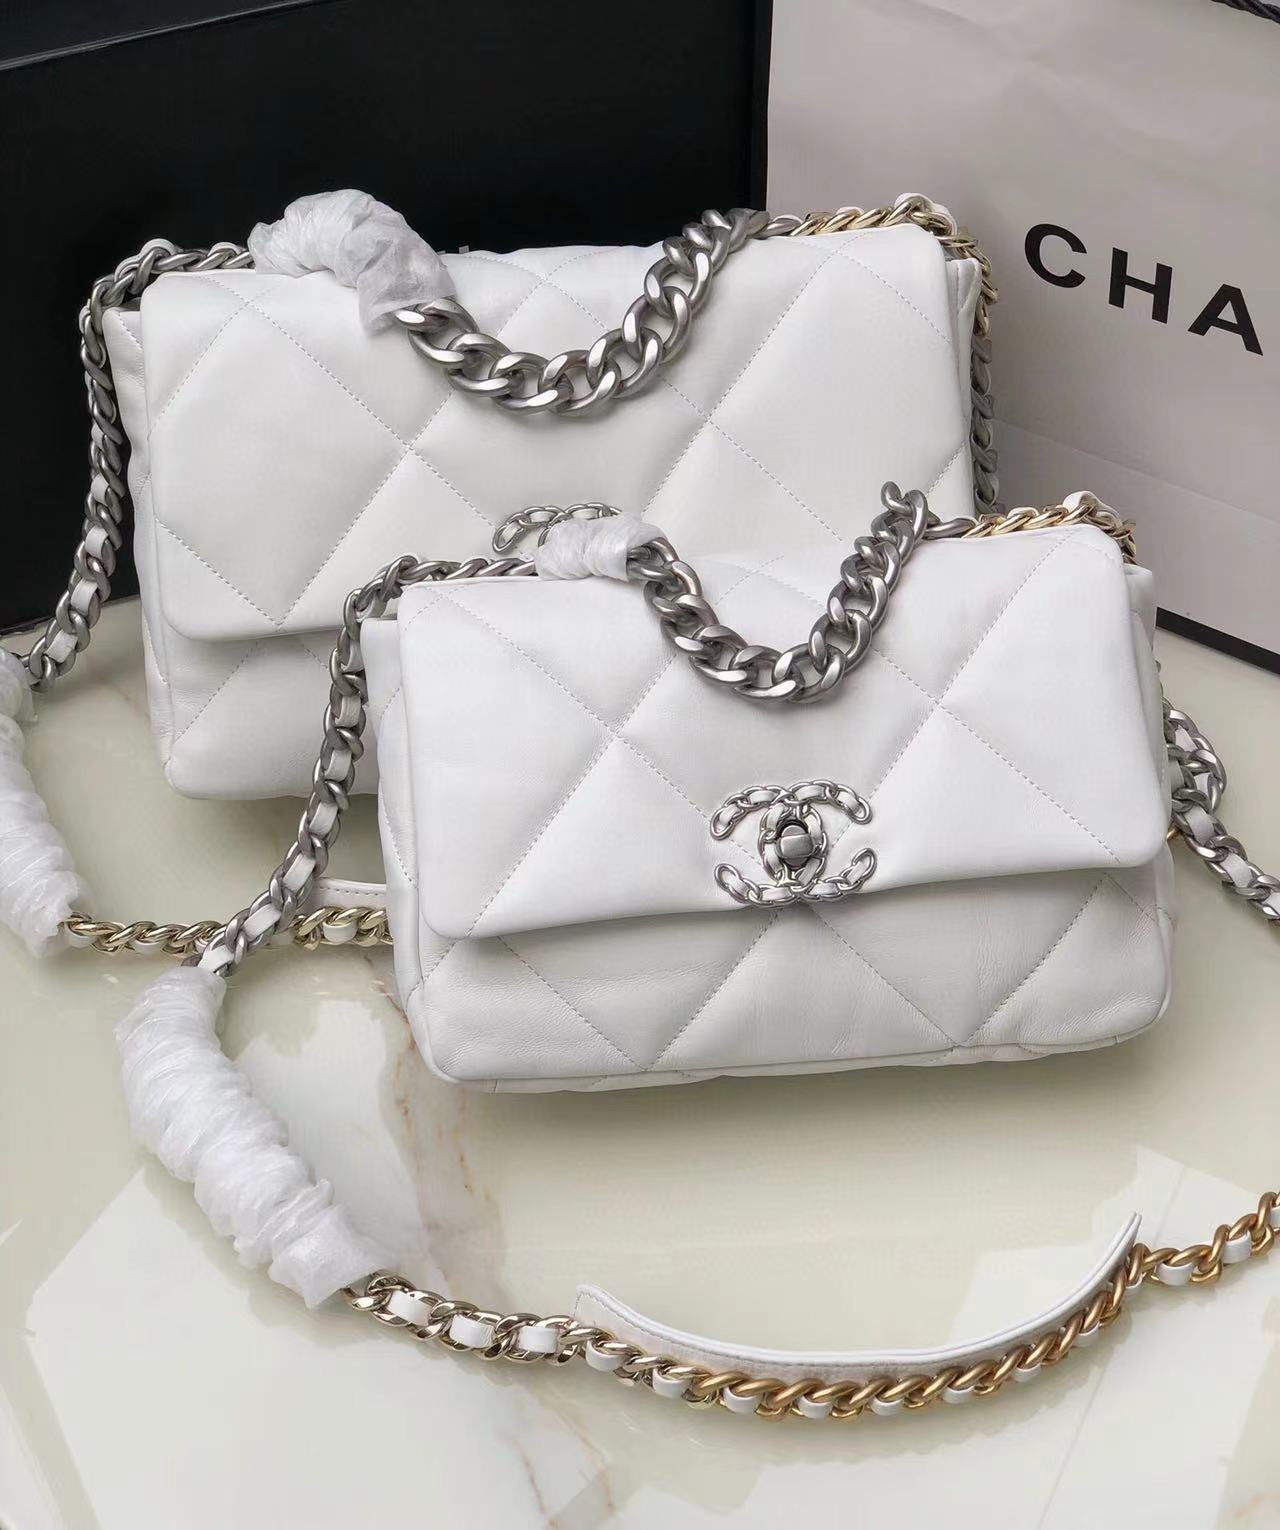 Chanel 19 flap bag AS1160 AS1161 AS1162 White Silver Hardware